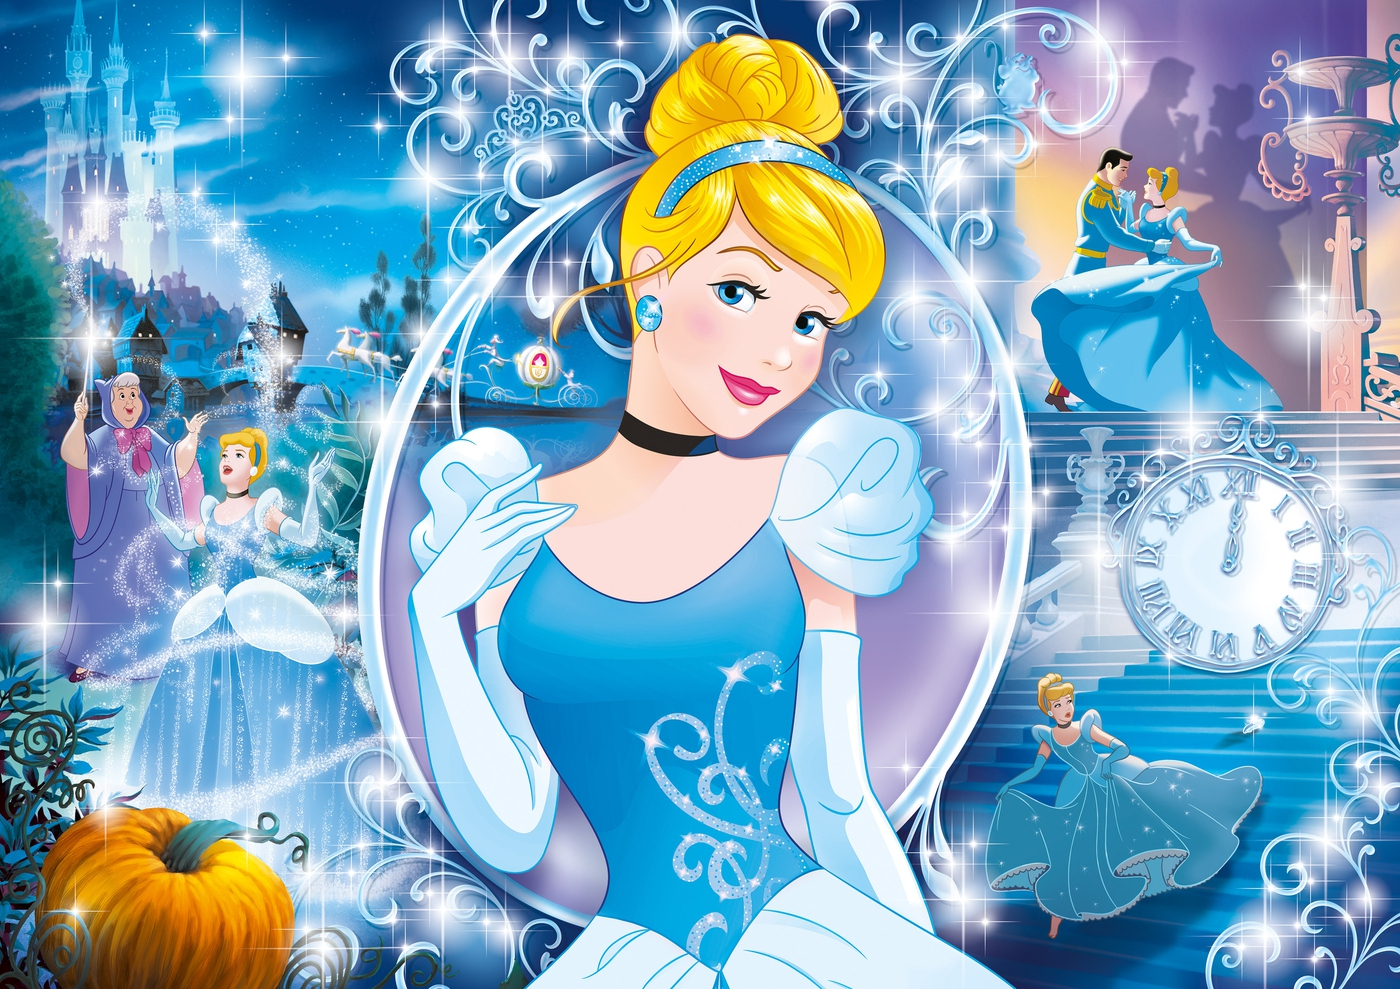 Disney Princess: Cendrillon - 104 Pcs - Brilliant Puzzle destiné Cendrillon 3 Disney